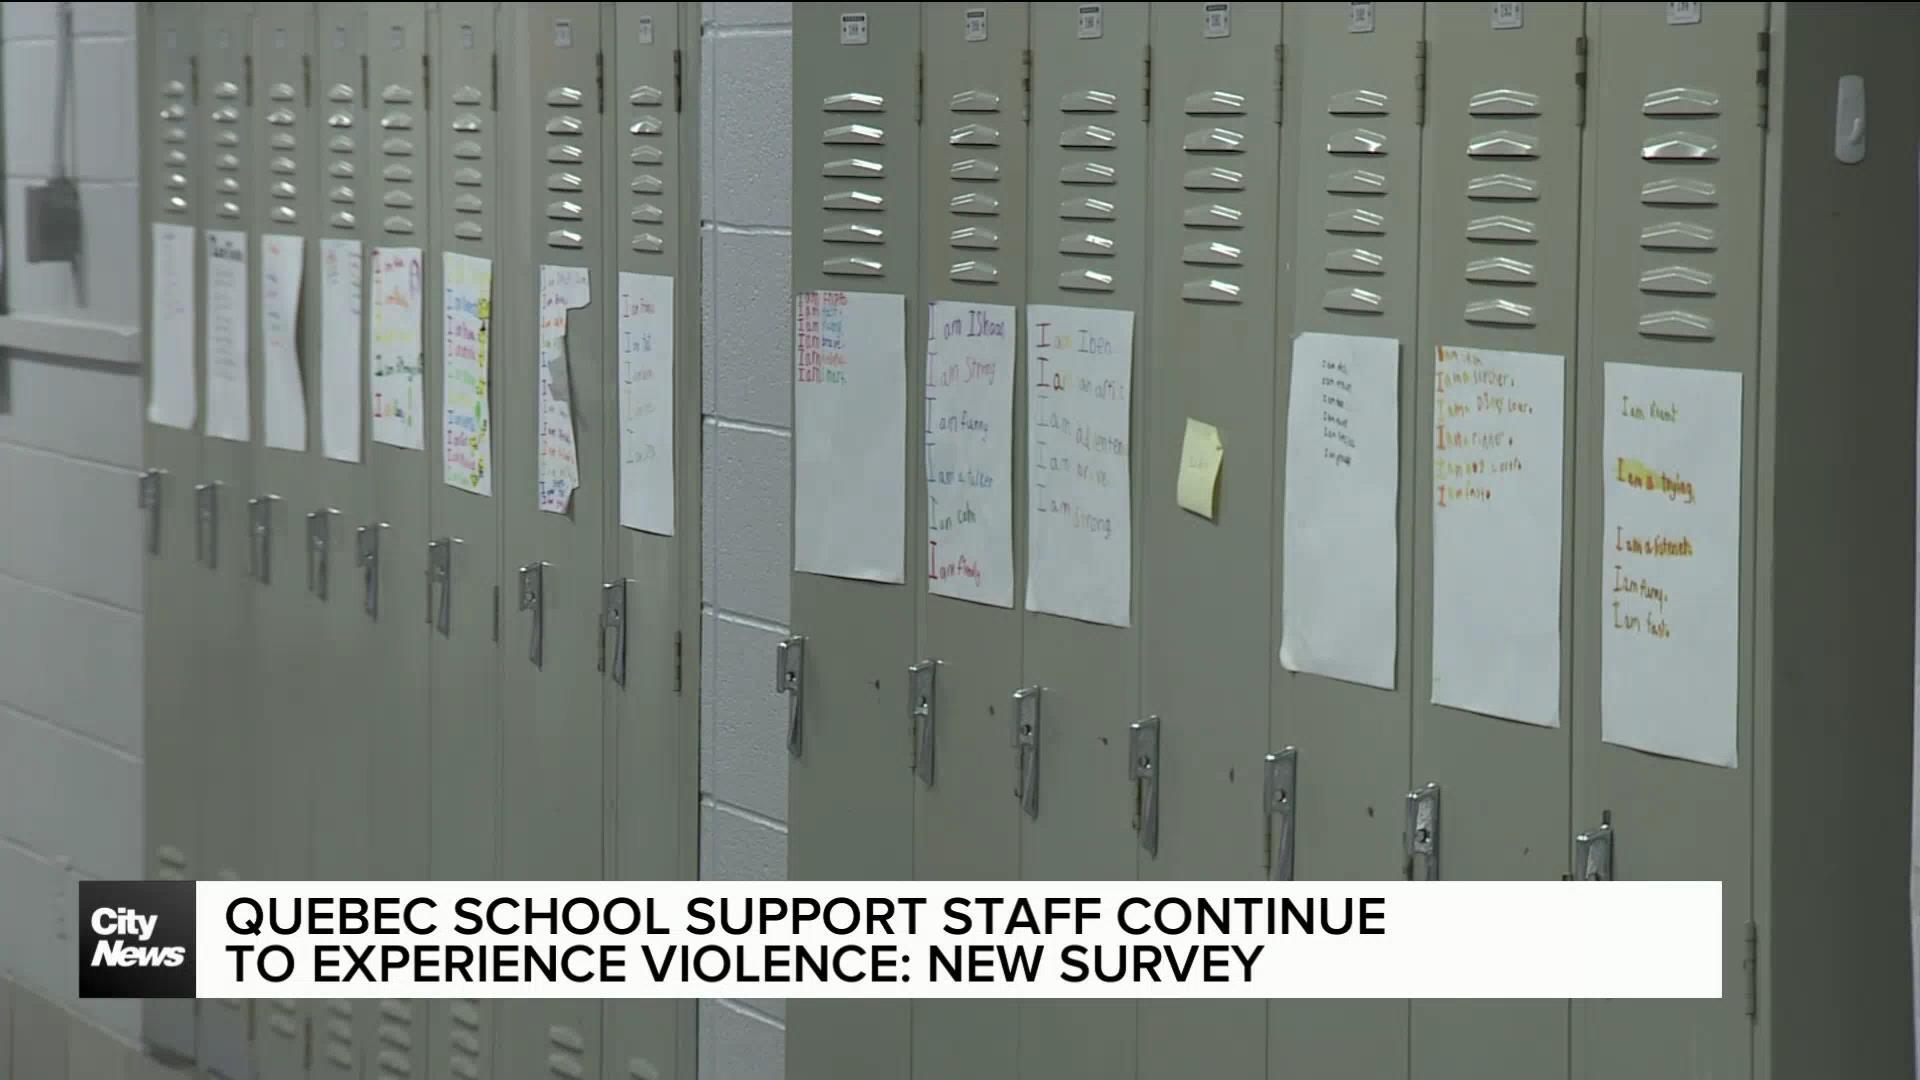 Quebec school support staff experiencing violence: survey